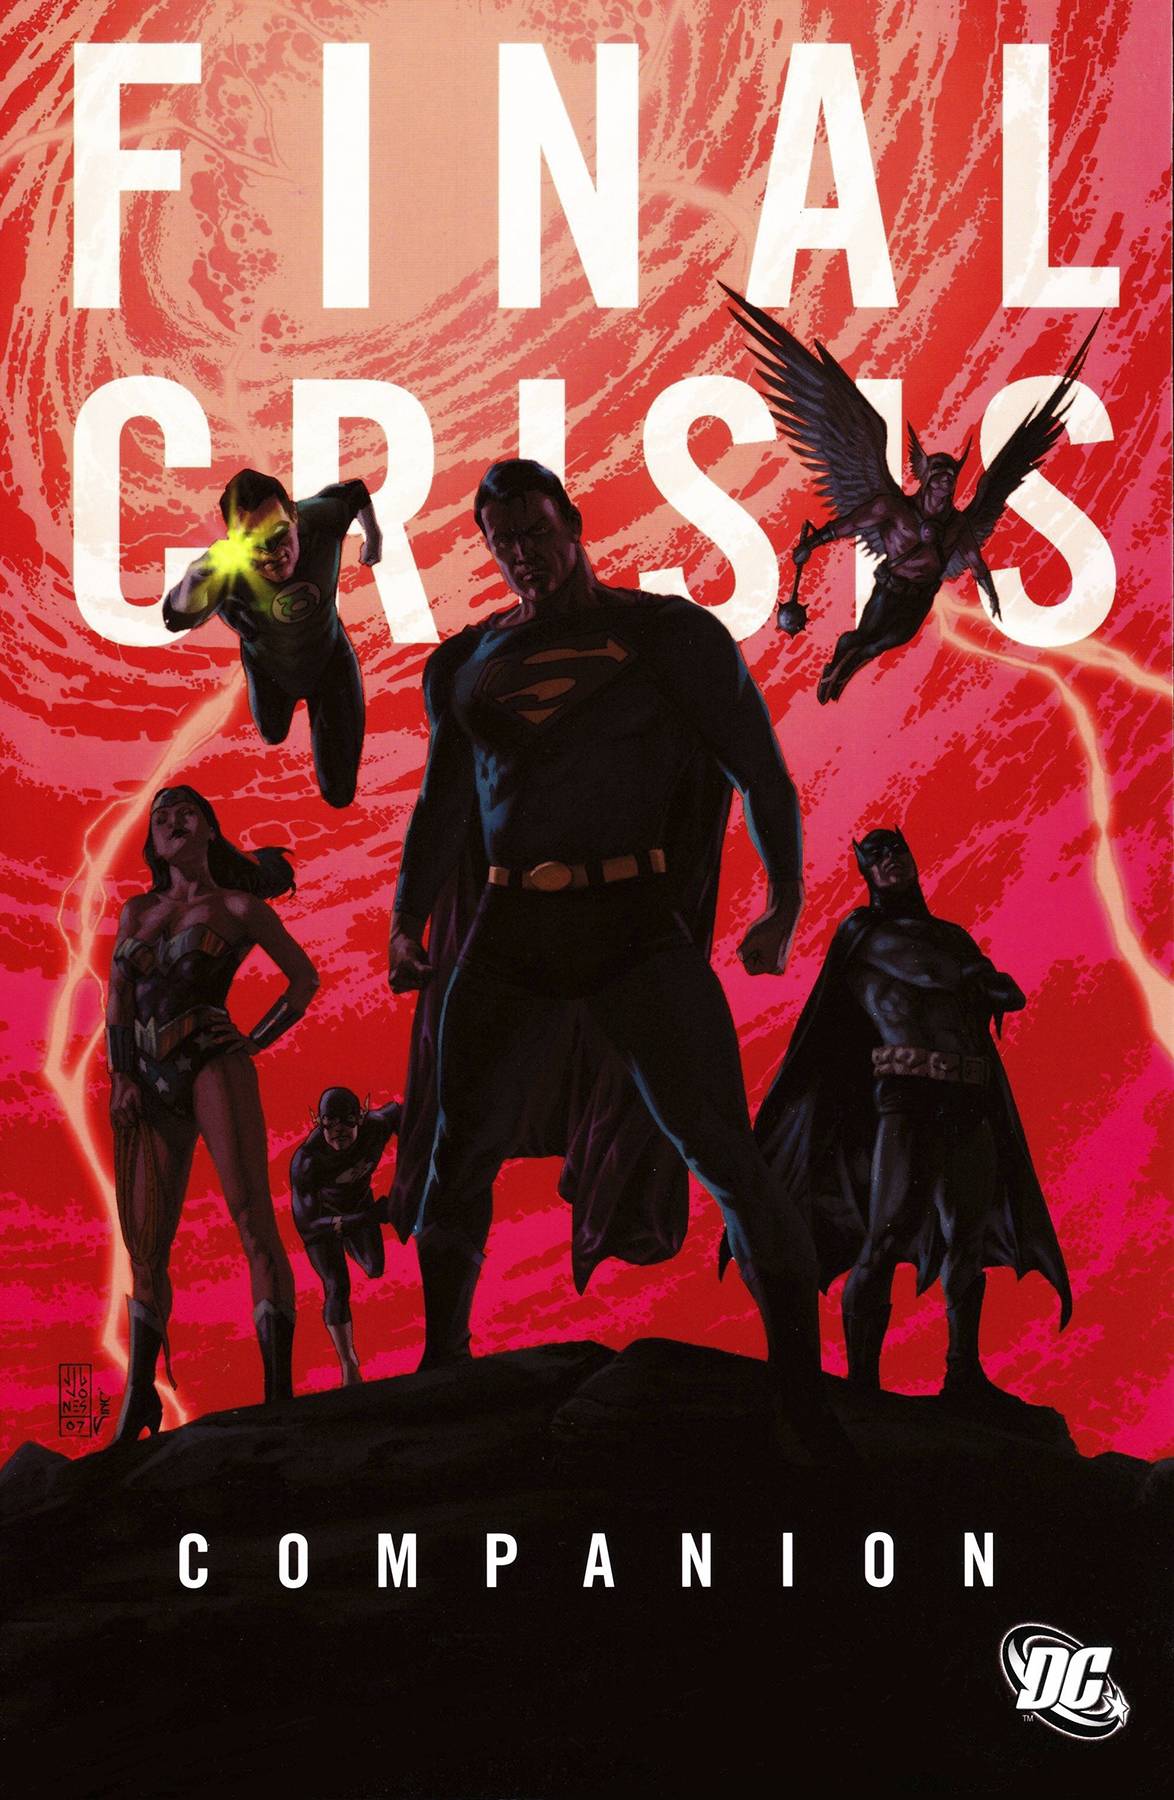 Final Crisis Companion Graphic Novel